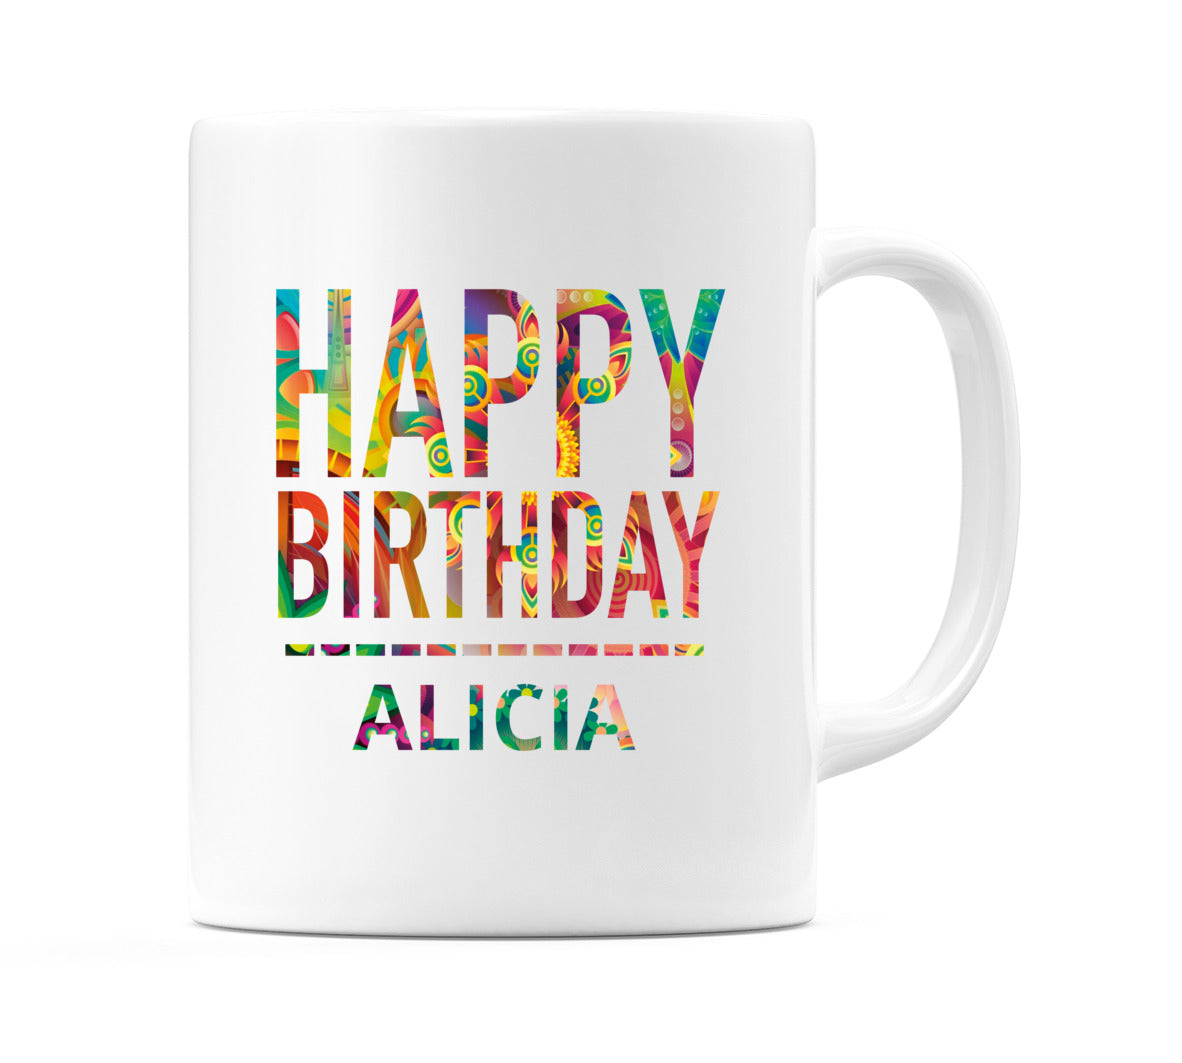 Happy Birthday Alicia (Tie Dye Effect) Mug Cup by WeDoMugs